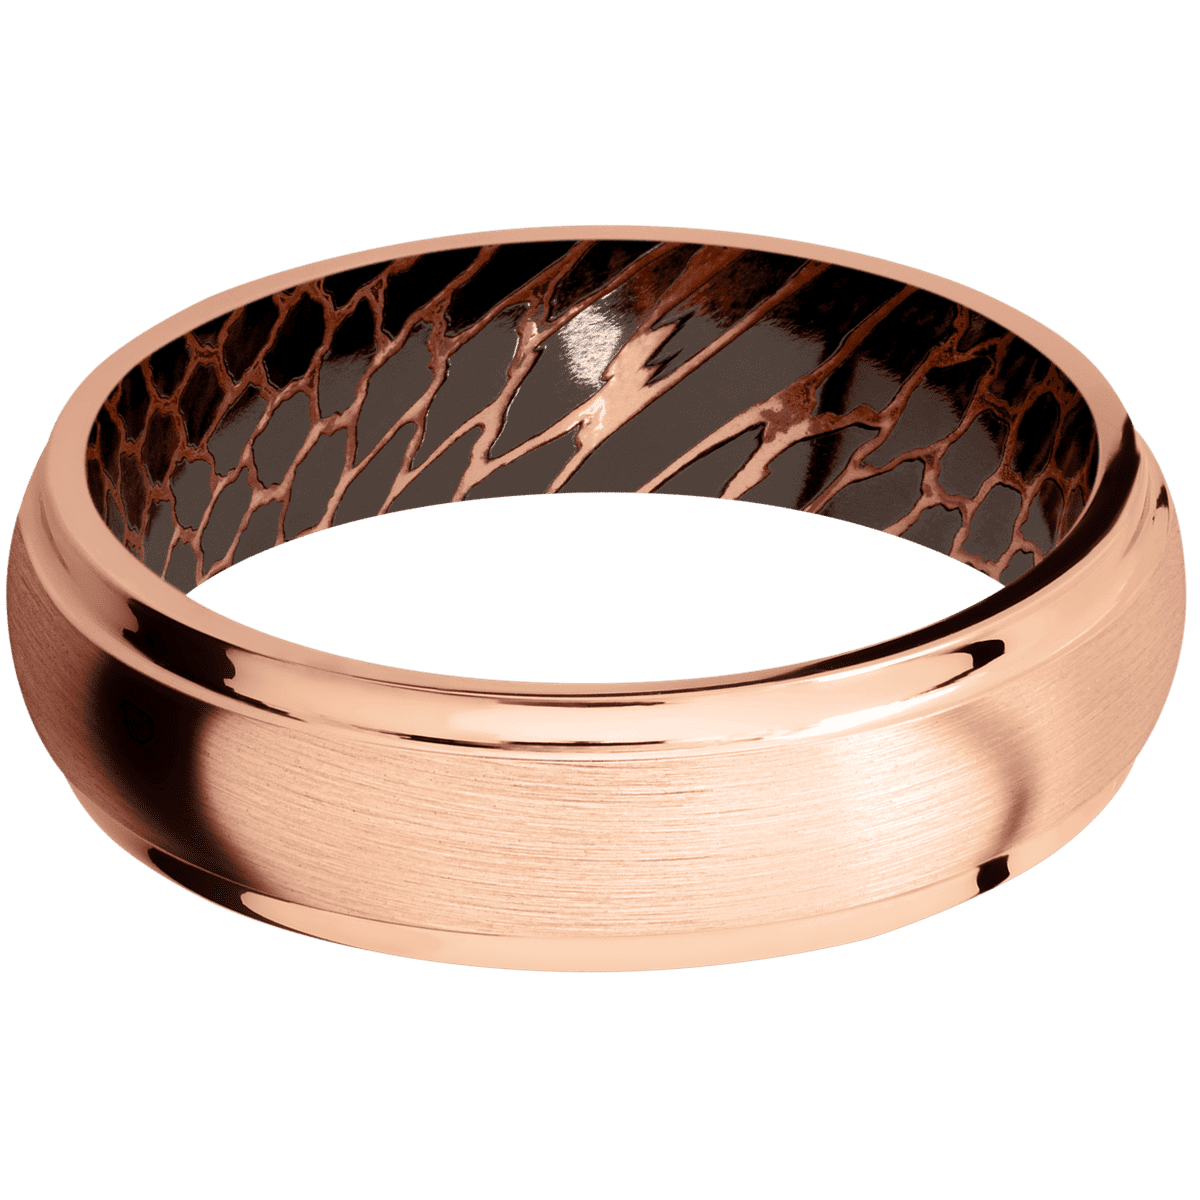 14K Rose Gold + Satin , Polish Finish + Superconductor Noir